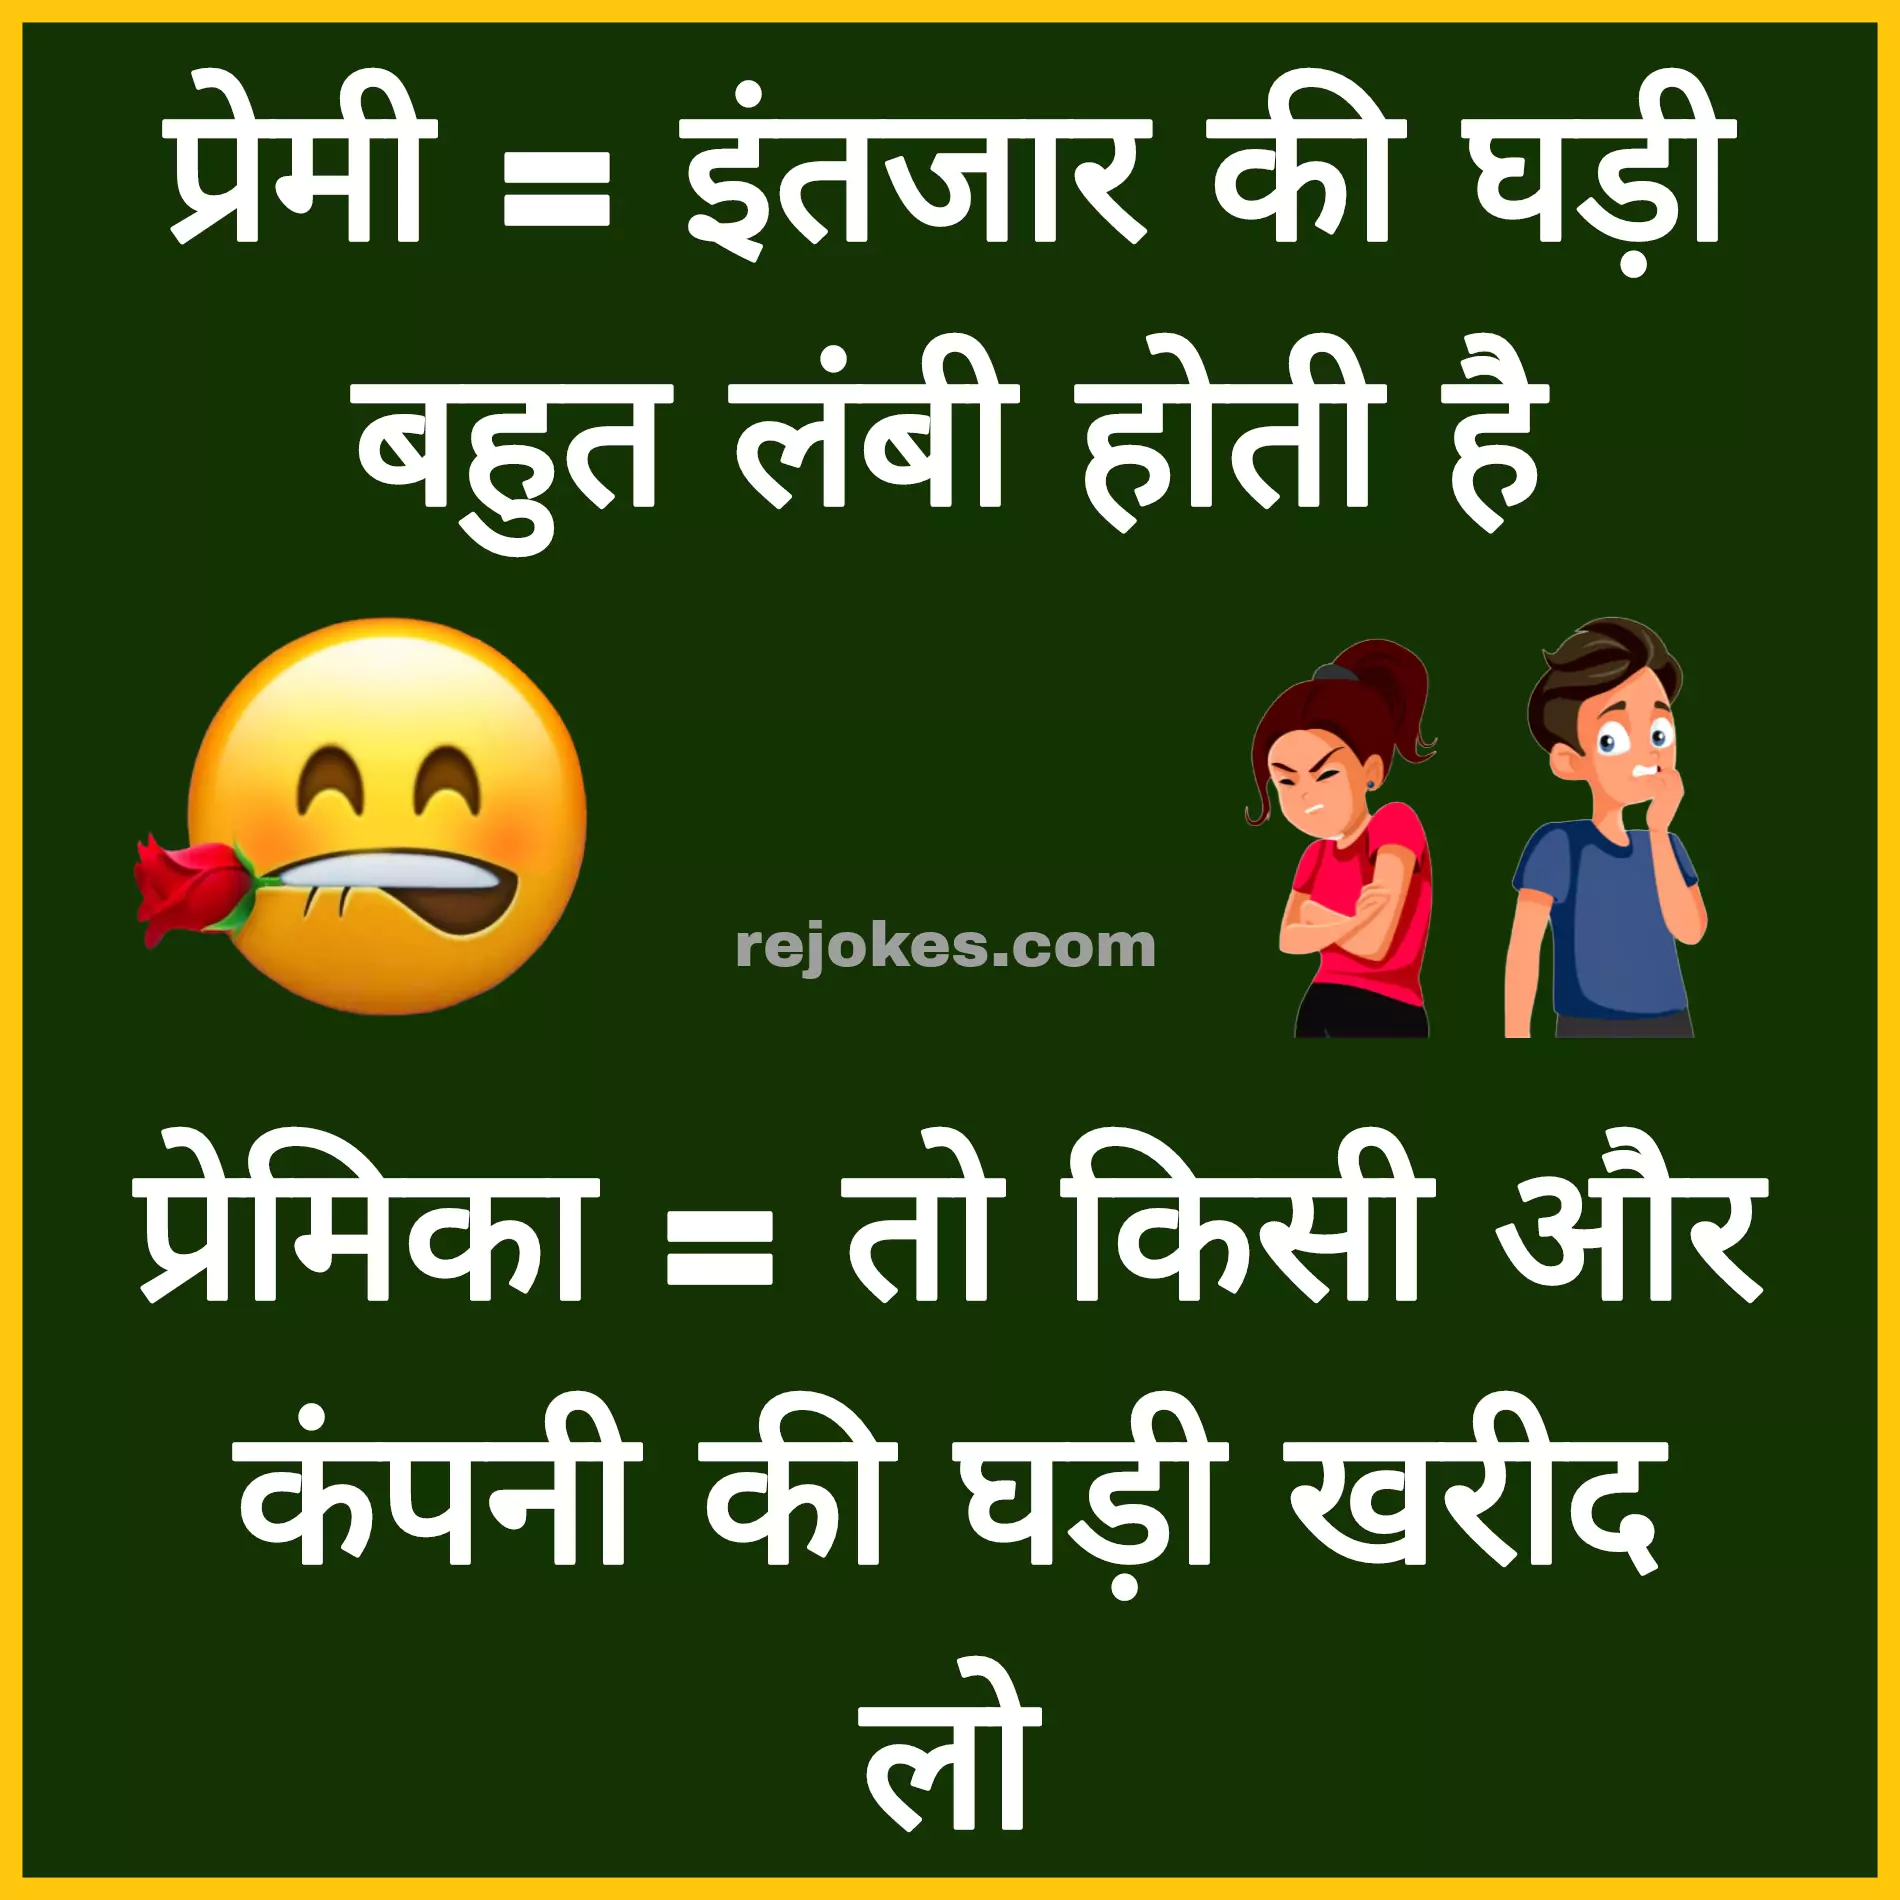 gf-bf jokes images in hindi download